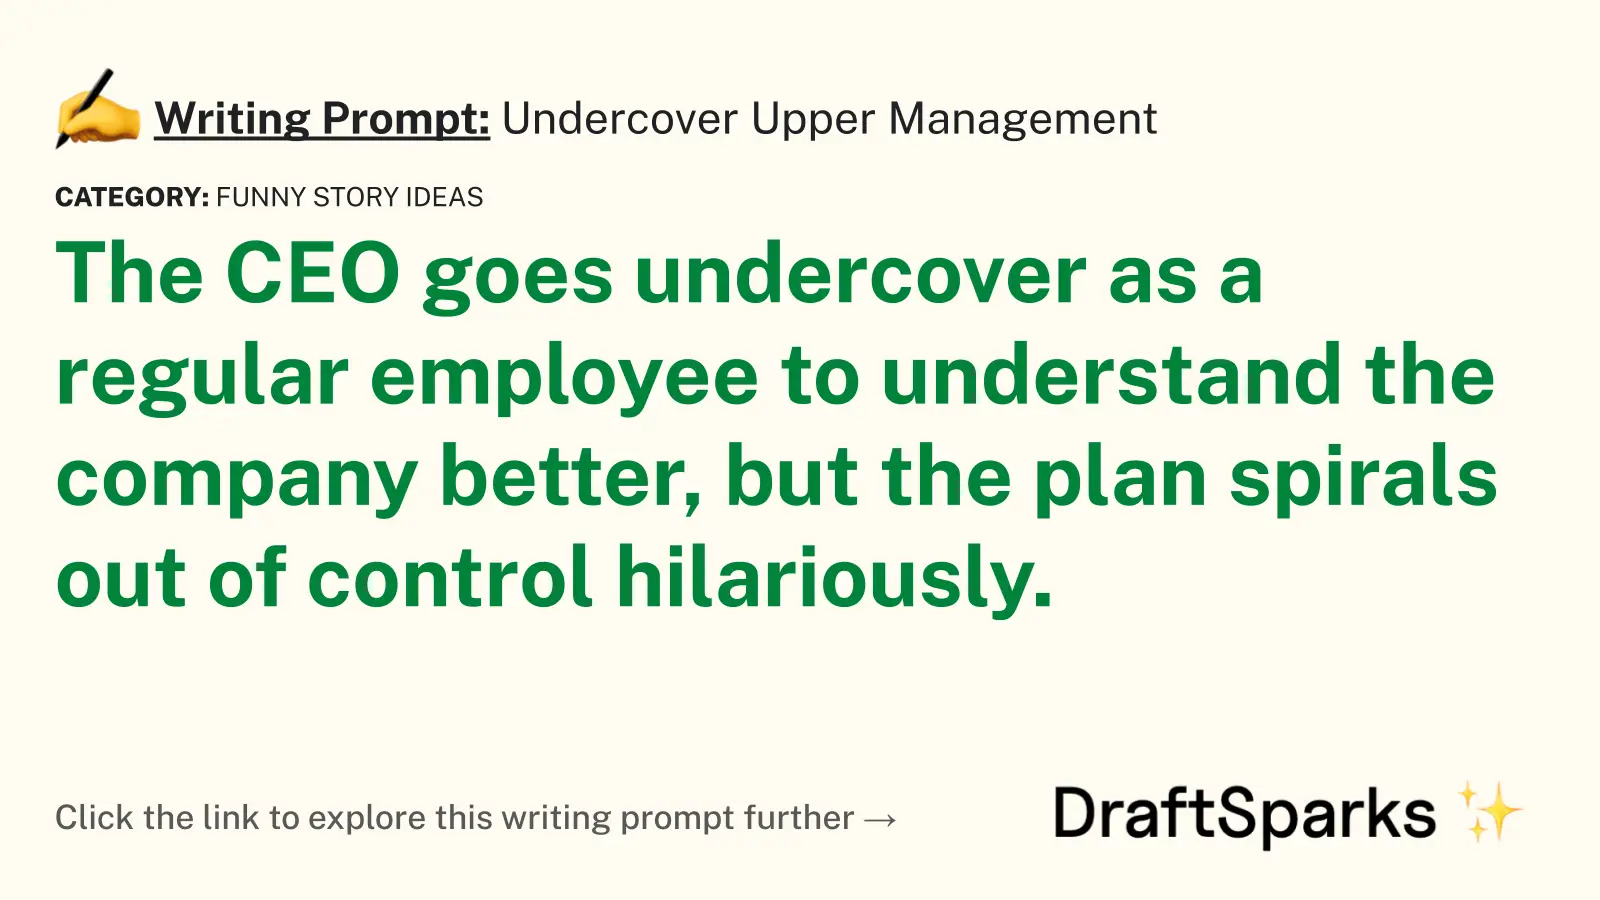 Undercover Upper Management